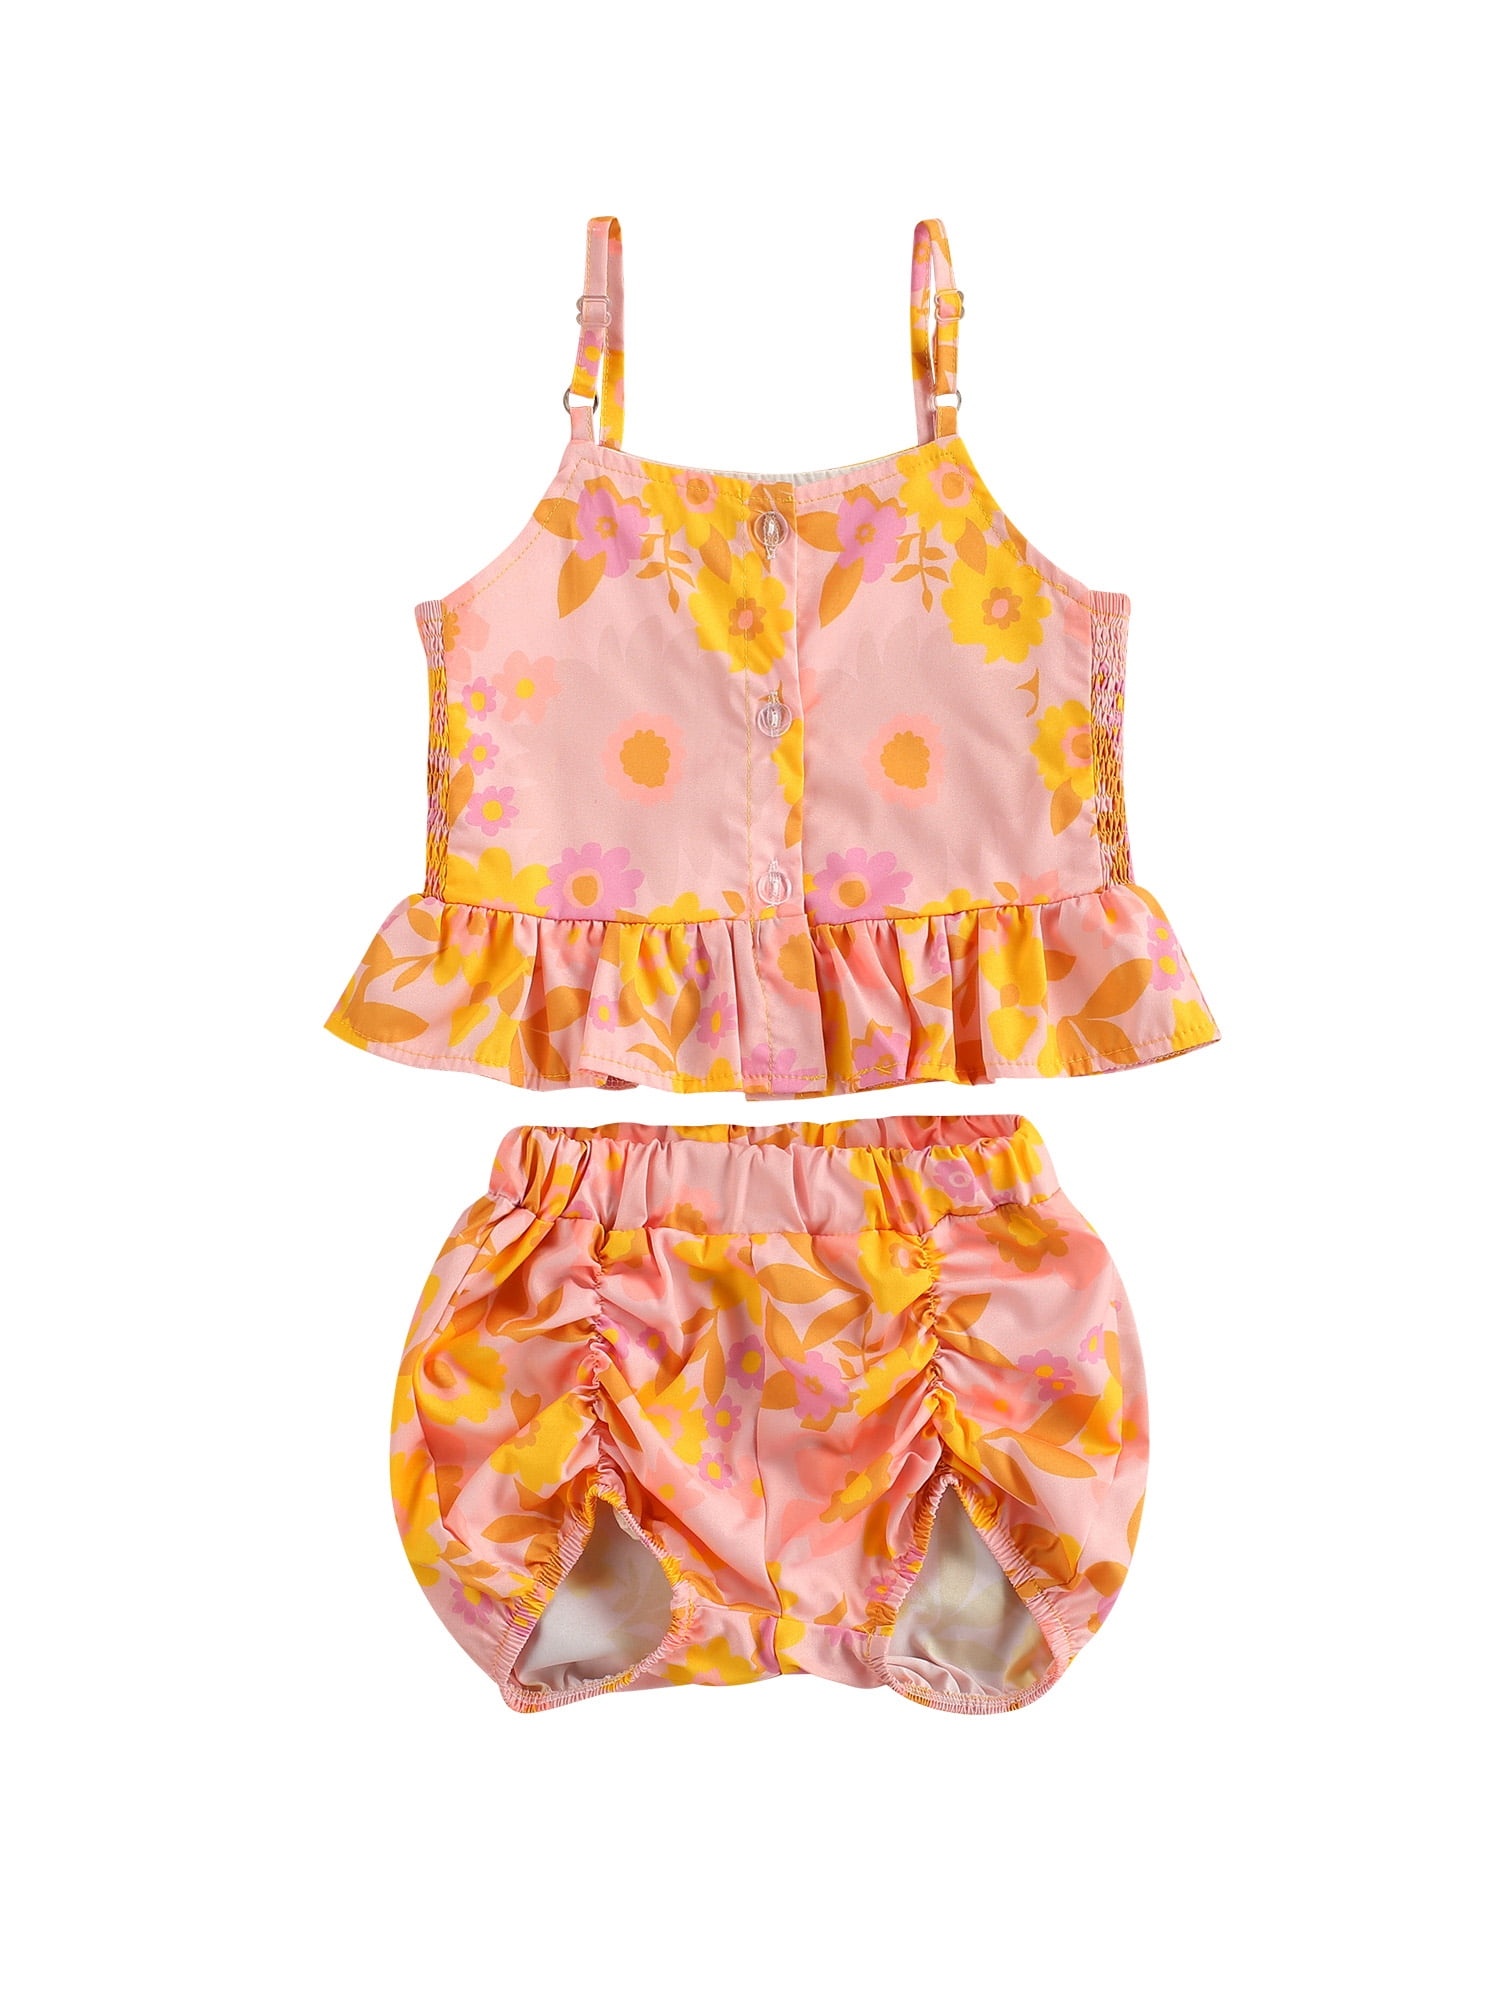 3T Z649 NEW Kid Toddle Girl Baby Spring Summer Sun Flowers Dress Orange SZ 12M 